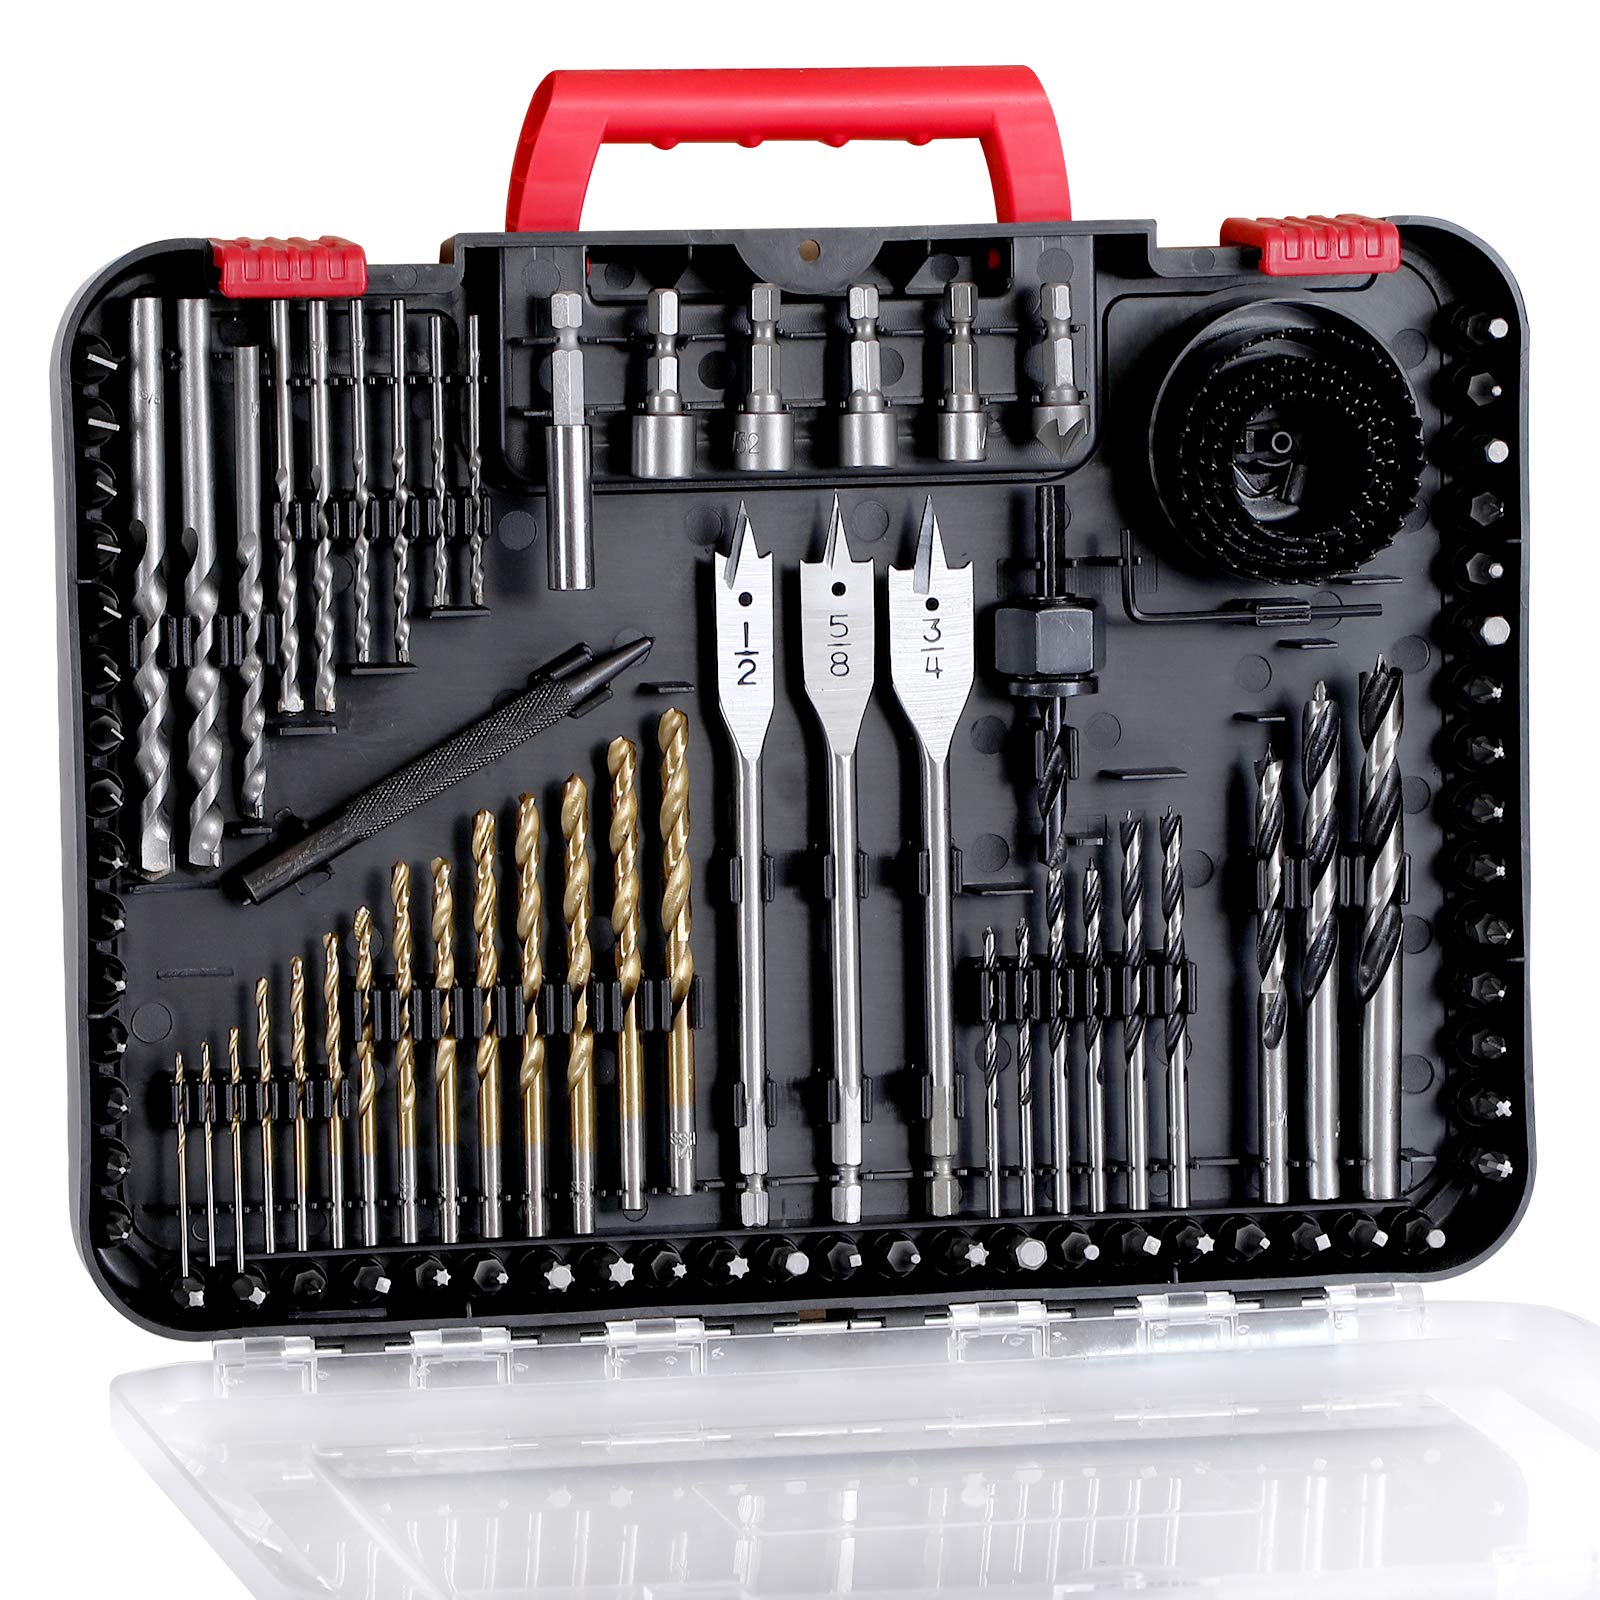 AVID POWER 20V MAX Lithium lon Cordless Drill Set Bundle with 100Pcs Drill Bit Set